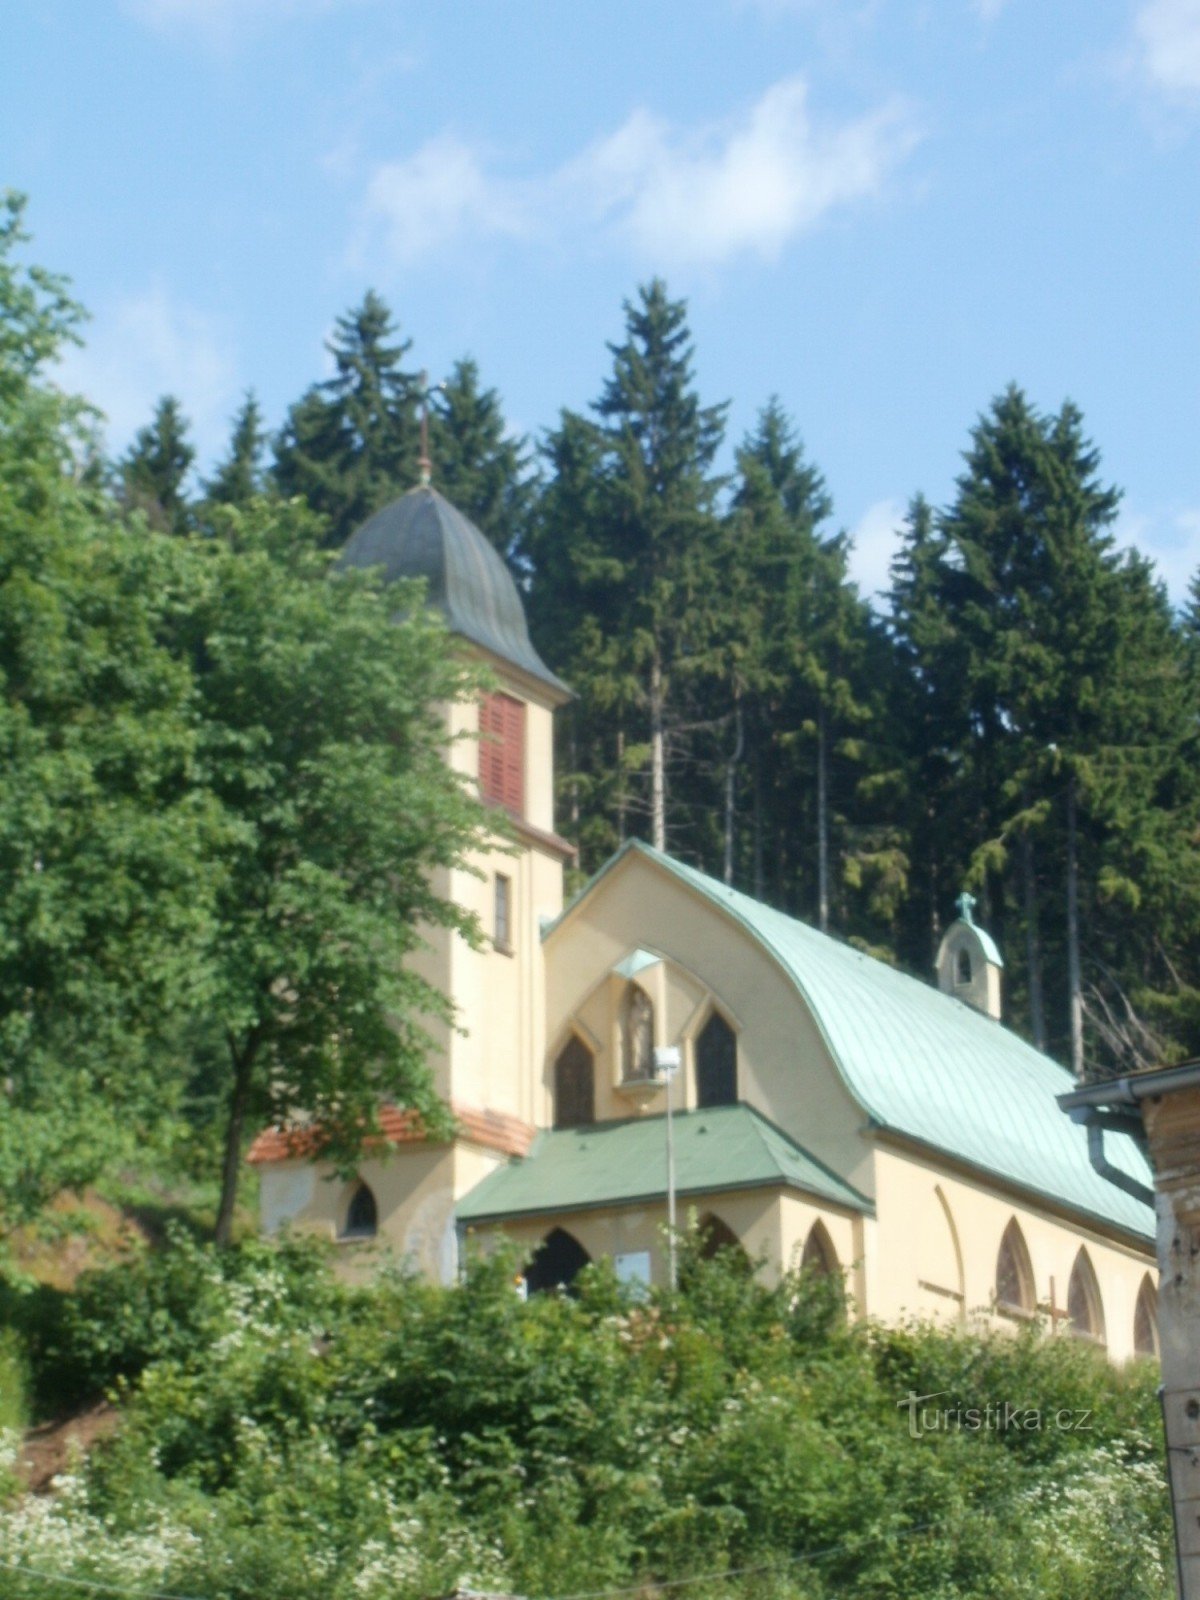 Dolní Maršov - église de St. Joseph